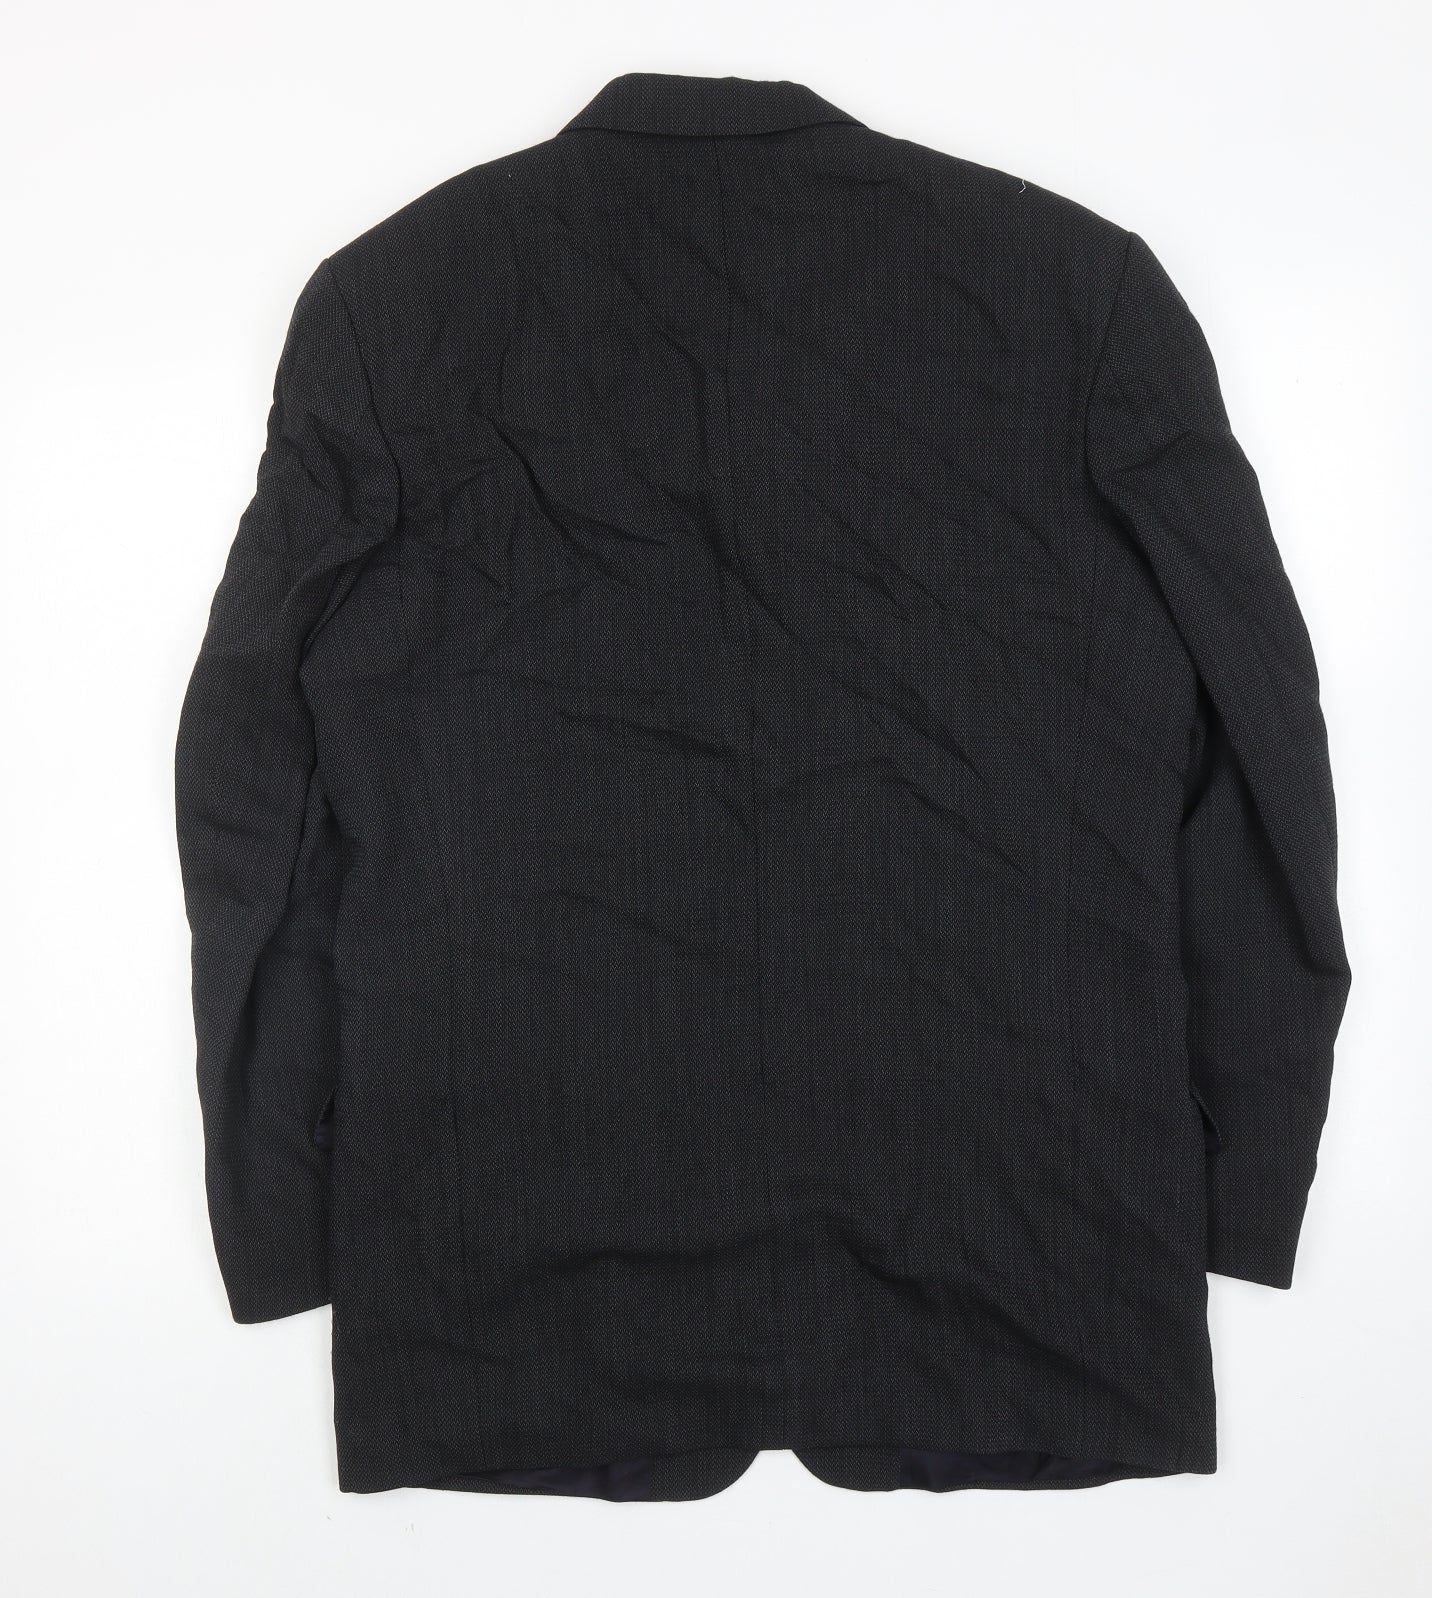 Becker Mens Black Wool Jacket Suit Jacket Size 40 Regular